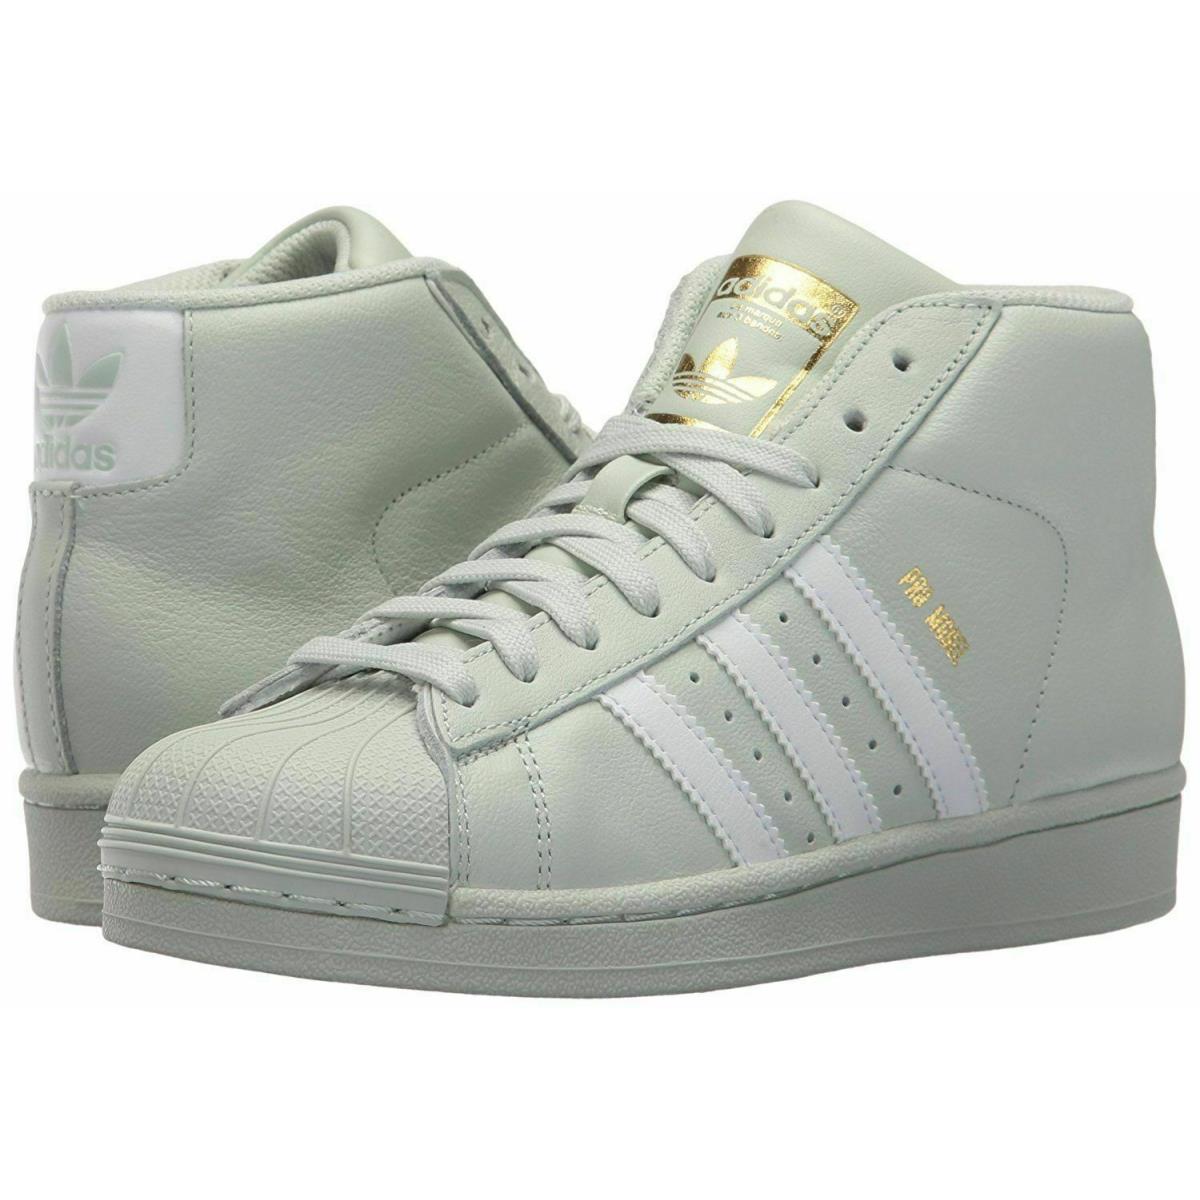 Adidas Originals Pro Model J CQ0622 Green/gold Youth - Linen Green/White/Gold Met